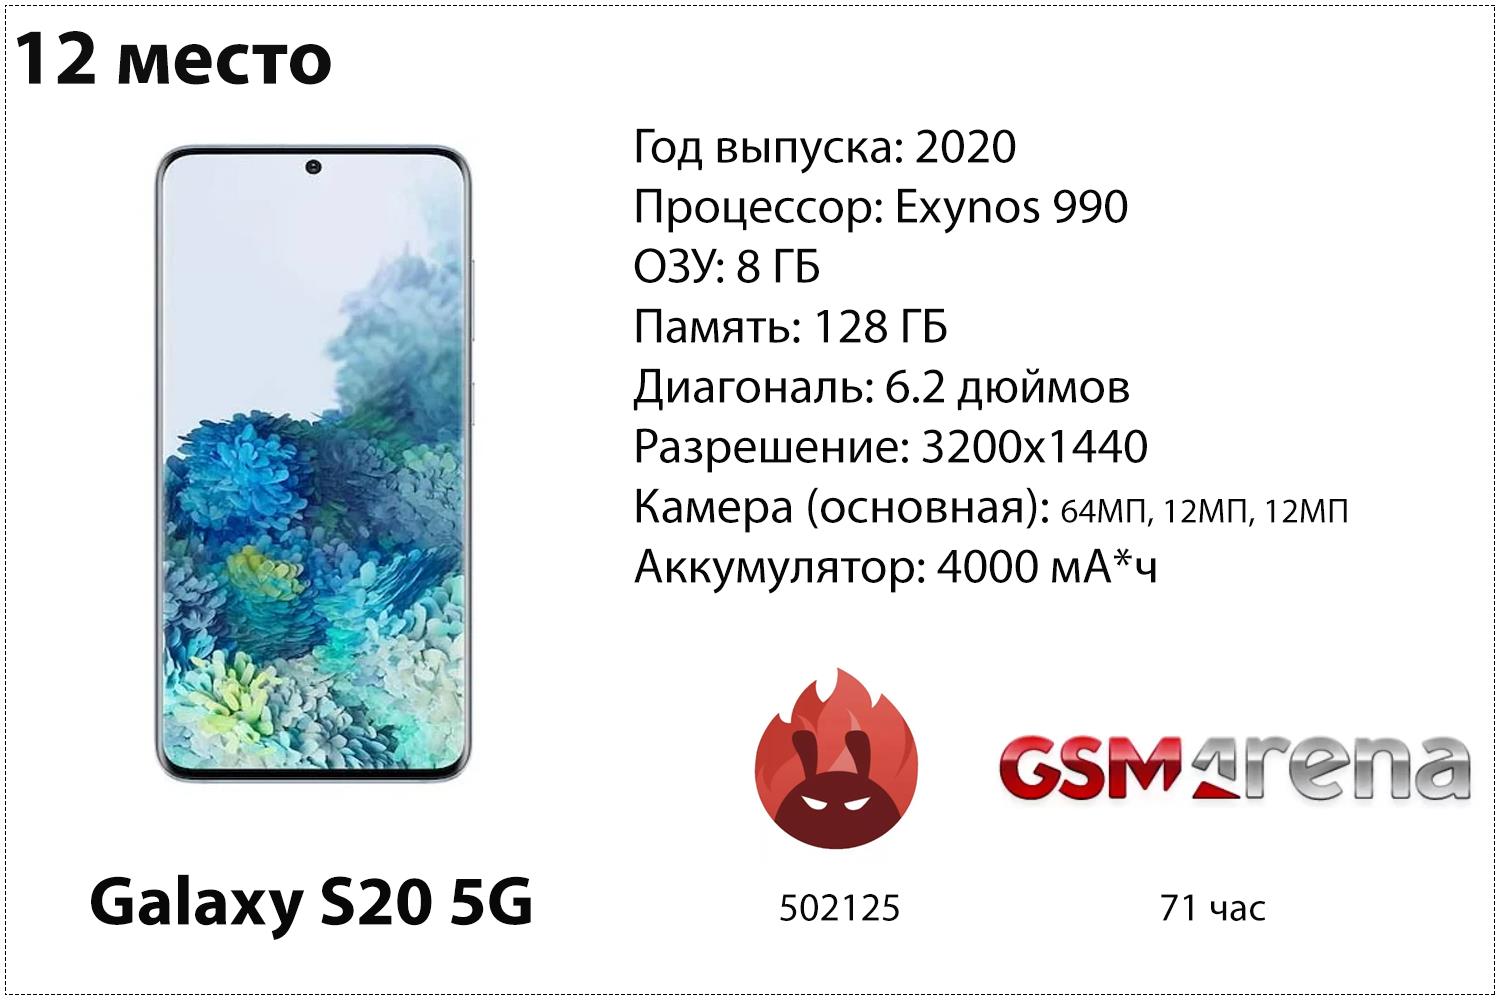 12 место - Galaxy S20 5G